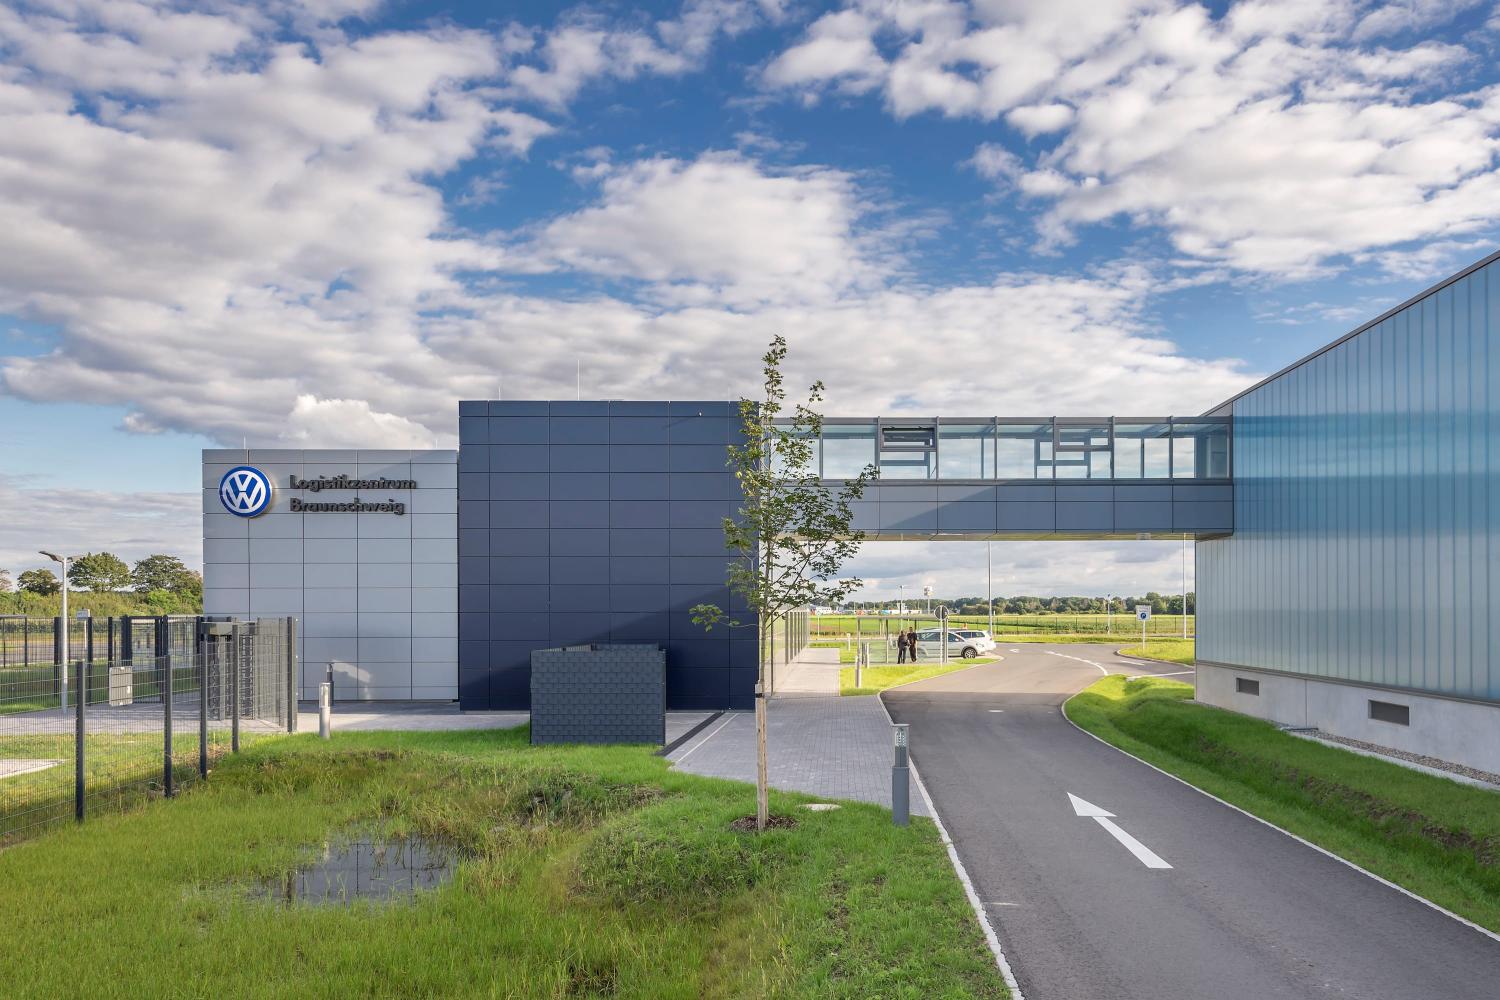 VW Neubau ideales Verpackungszentrum